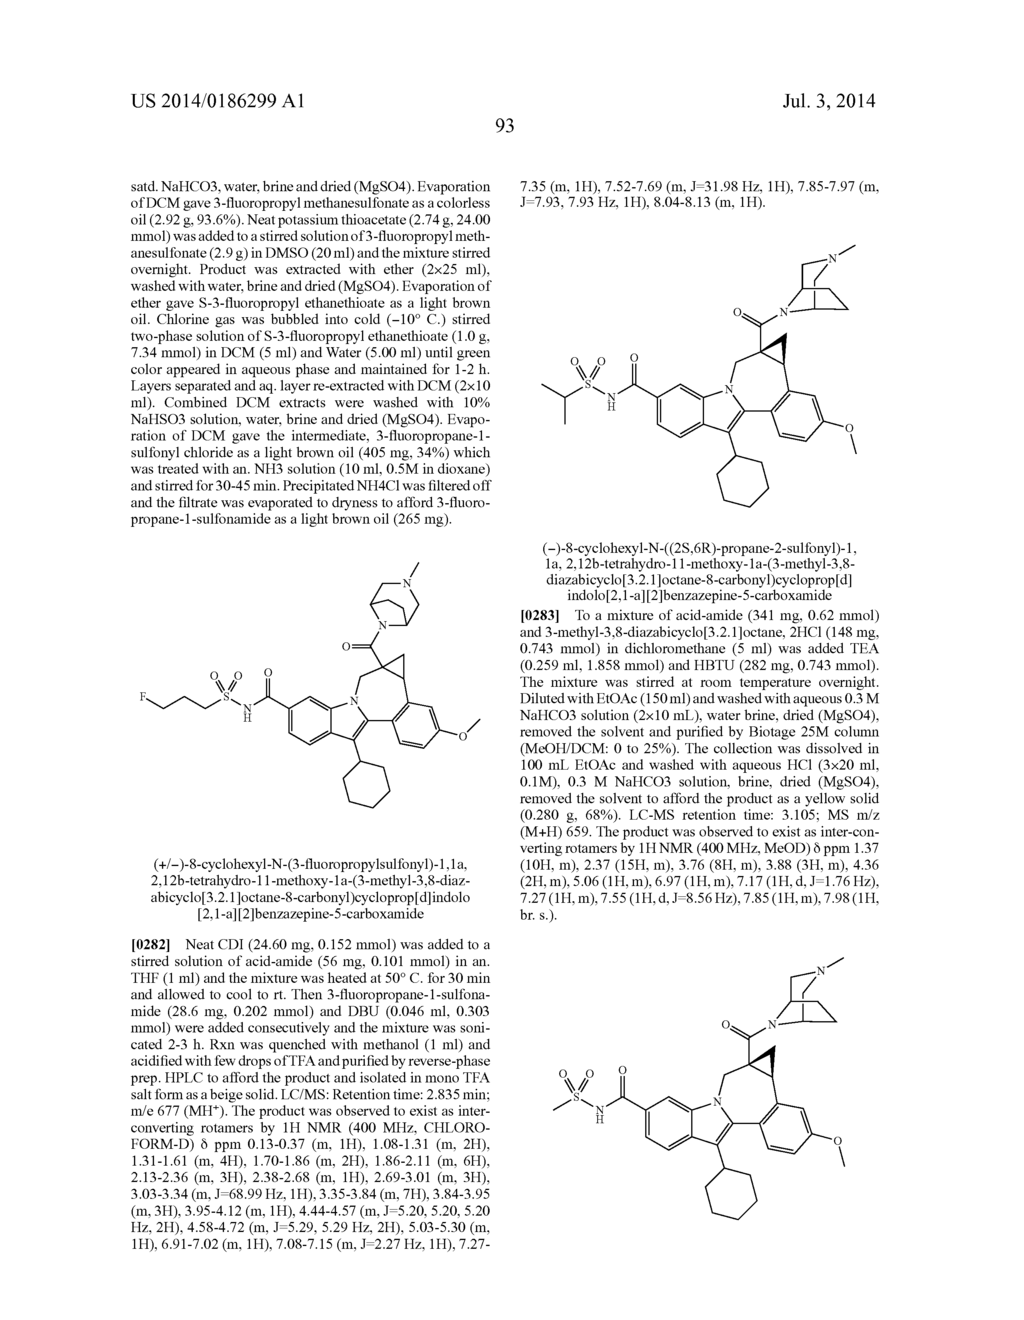 Cyclopropyl Fused Indolobenzazepine HCV NS5B Inhibitors - diagram, schematic, and image 94